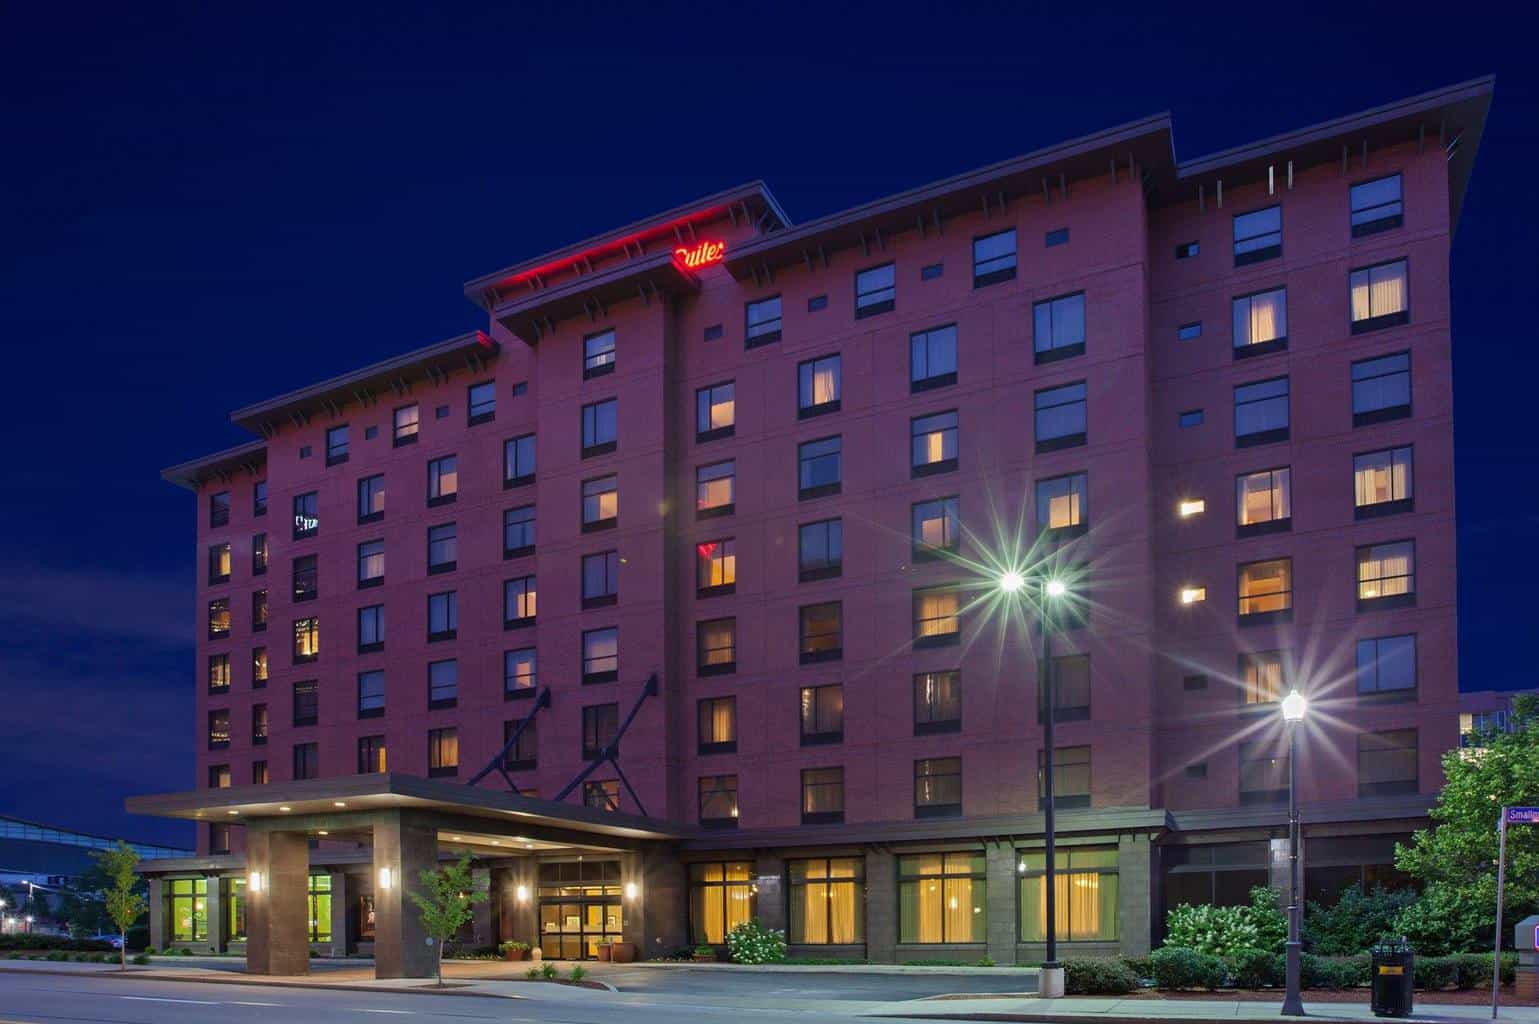 Hampton Inn and Suites Hotel Pittsburgh Pennsylvania